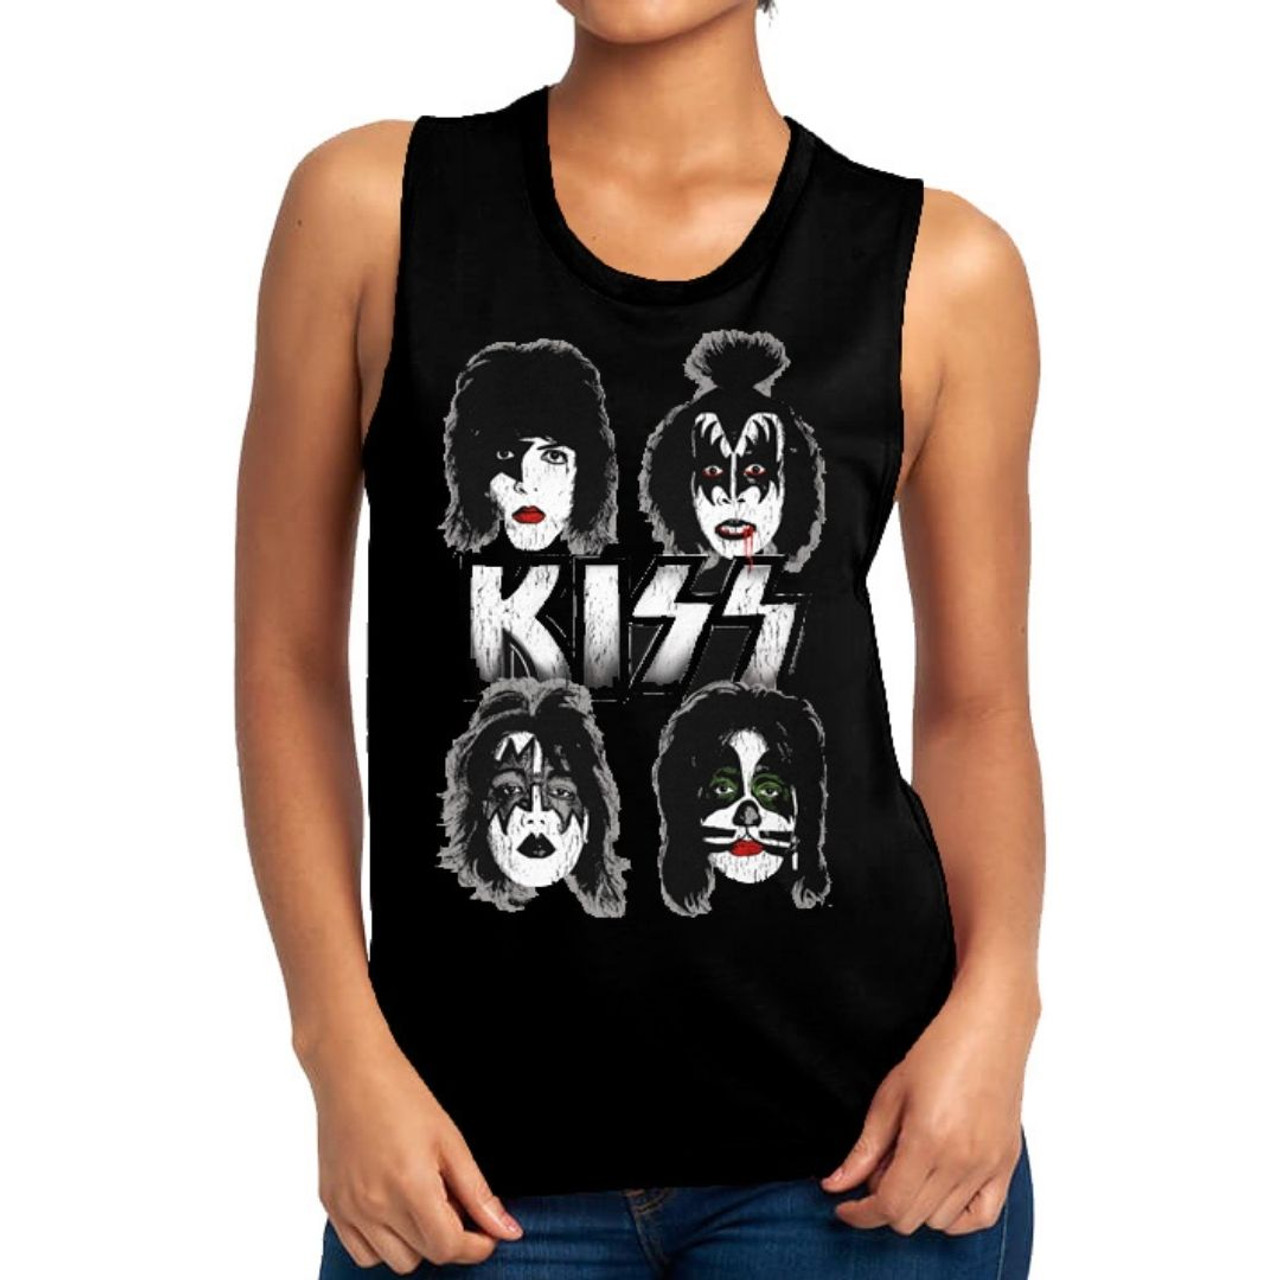 KISS Women's Vintage Fashion Sleeveless T-shirt - Band Member Images. Black Tank Top Shirt - Rocker